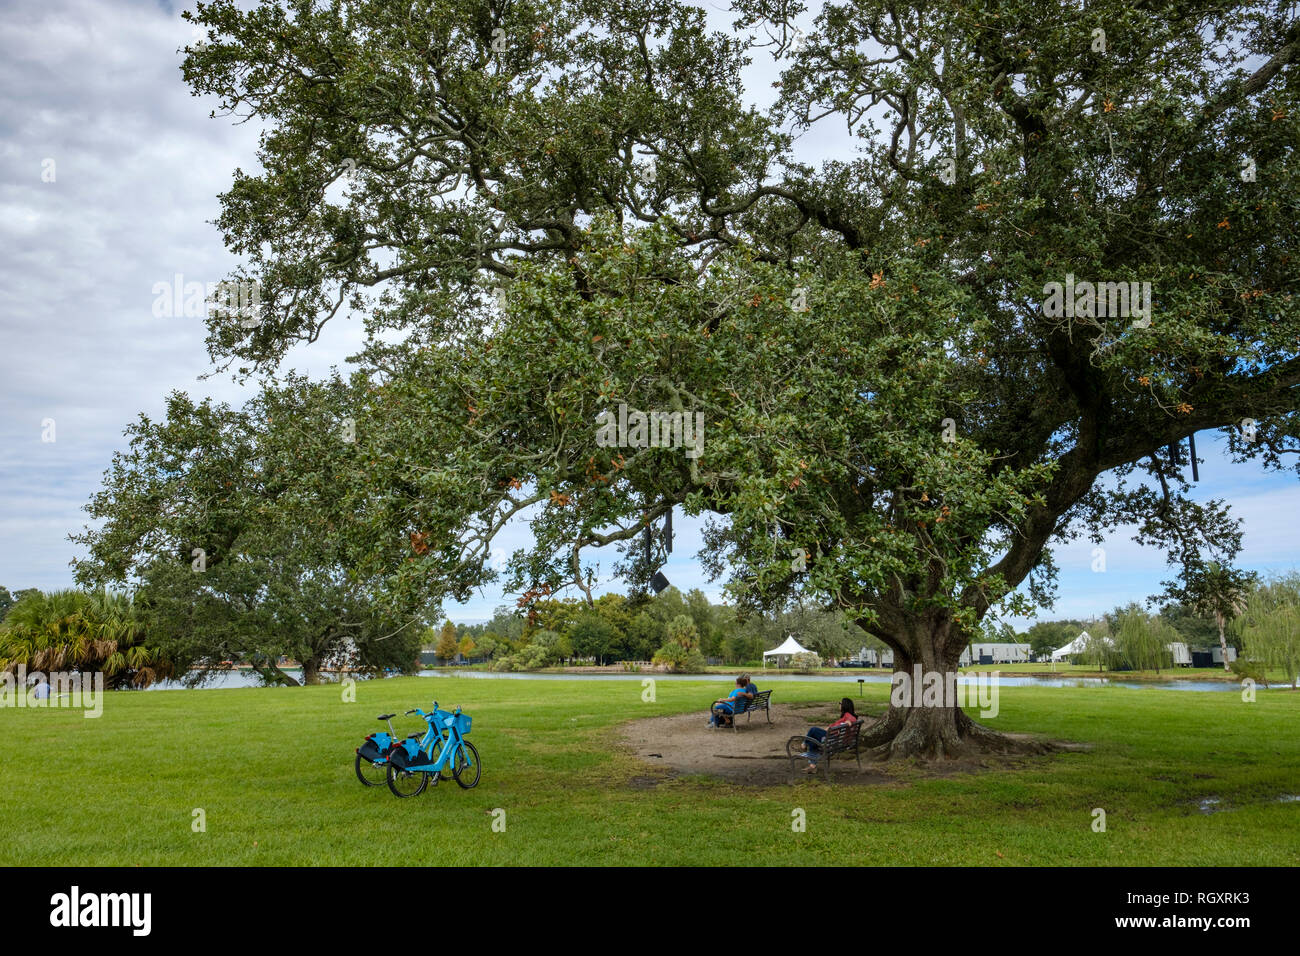 Il canto Quercia, o chime Tree, artista Jim Hart - New Orleans City Park, New Orleans, Louisiana, Stati Uniti d'America Foto Stock